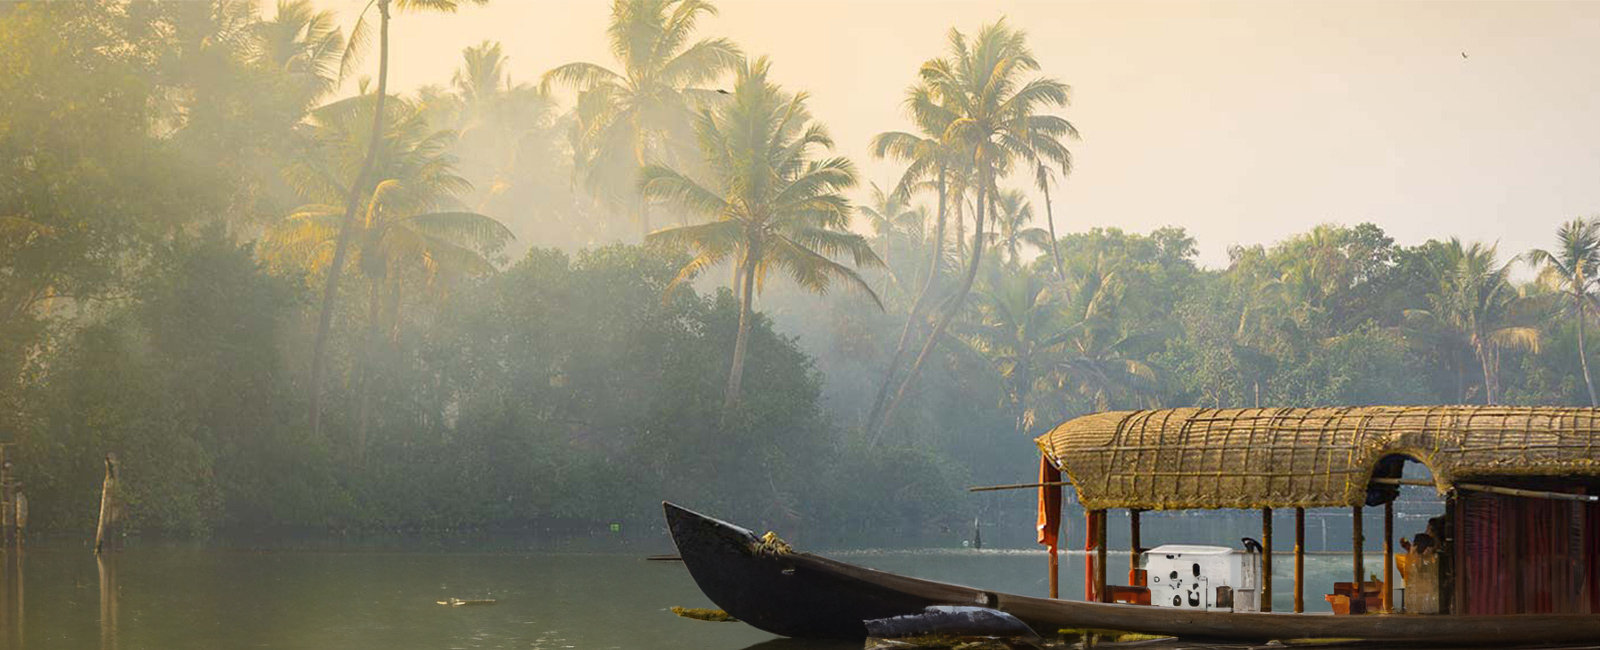 A boat sailing through the backwaters of Kerala